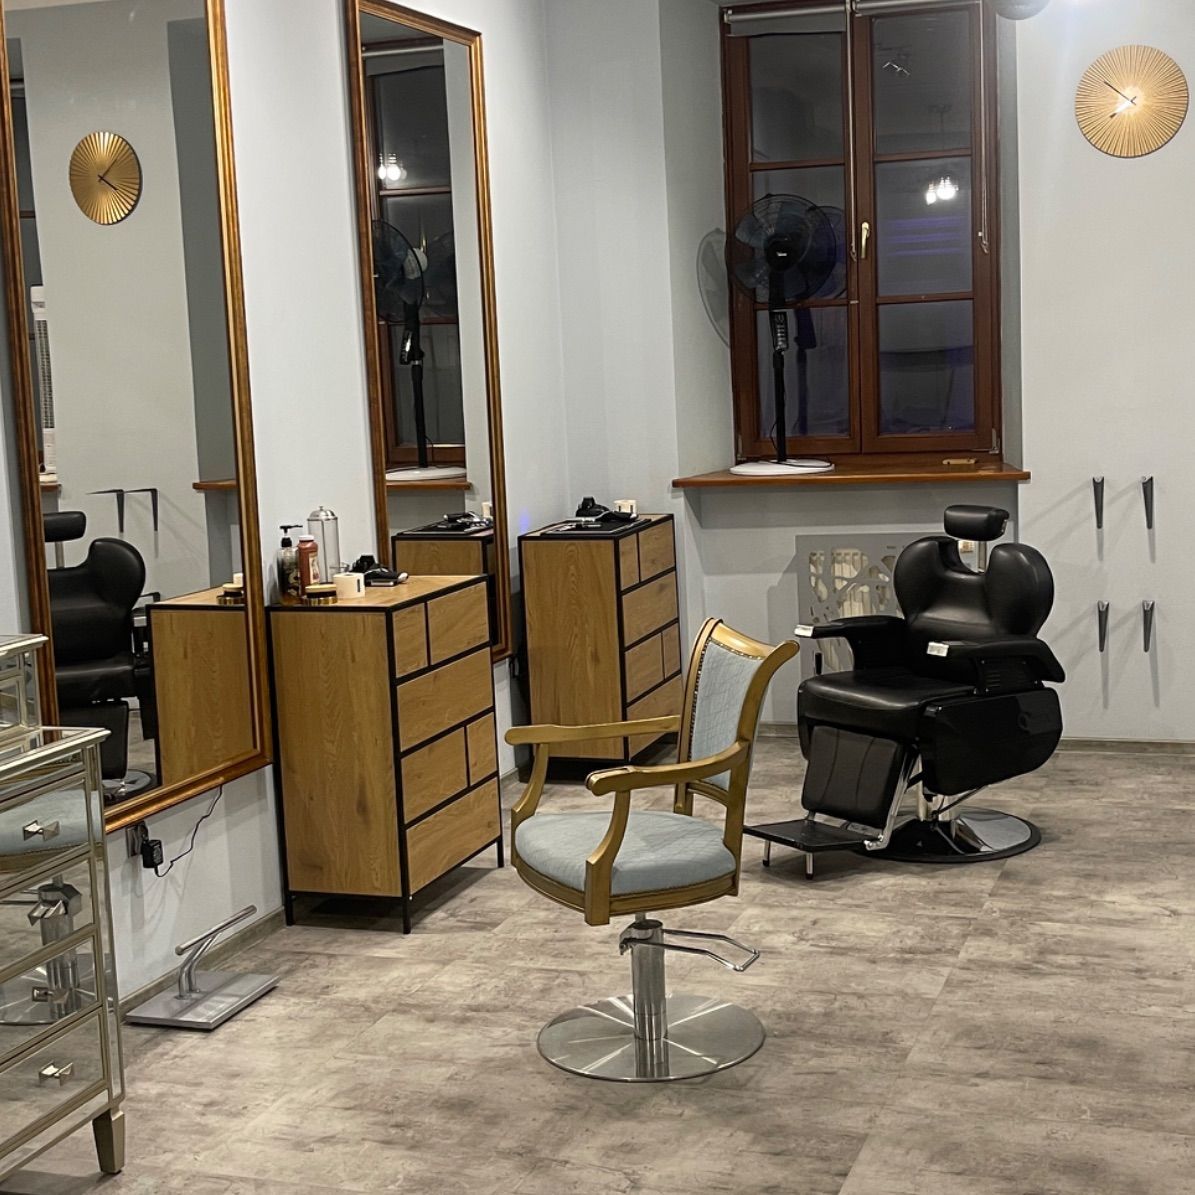 Kasia - Centrum - Fryzjer Męski & Barber Shop